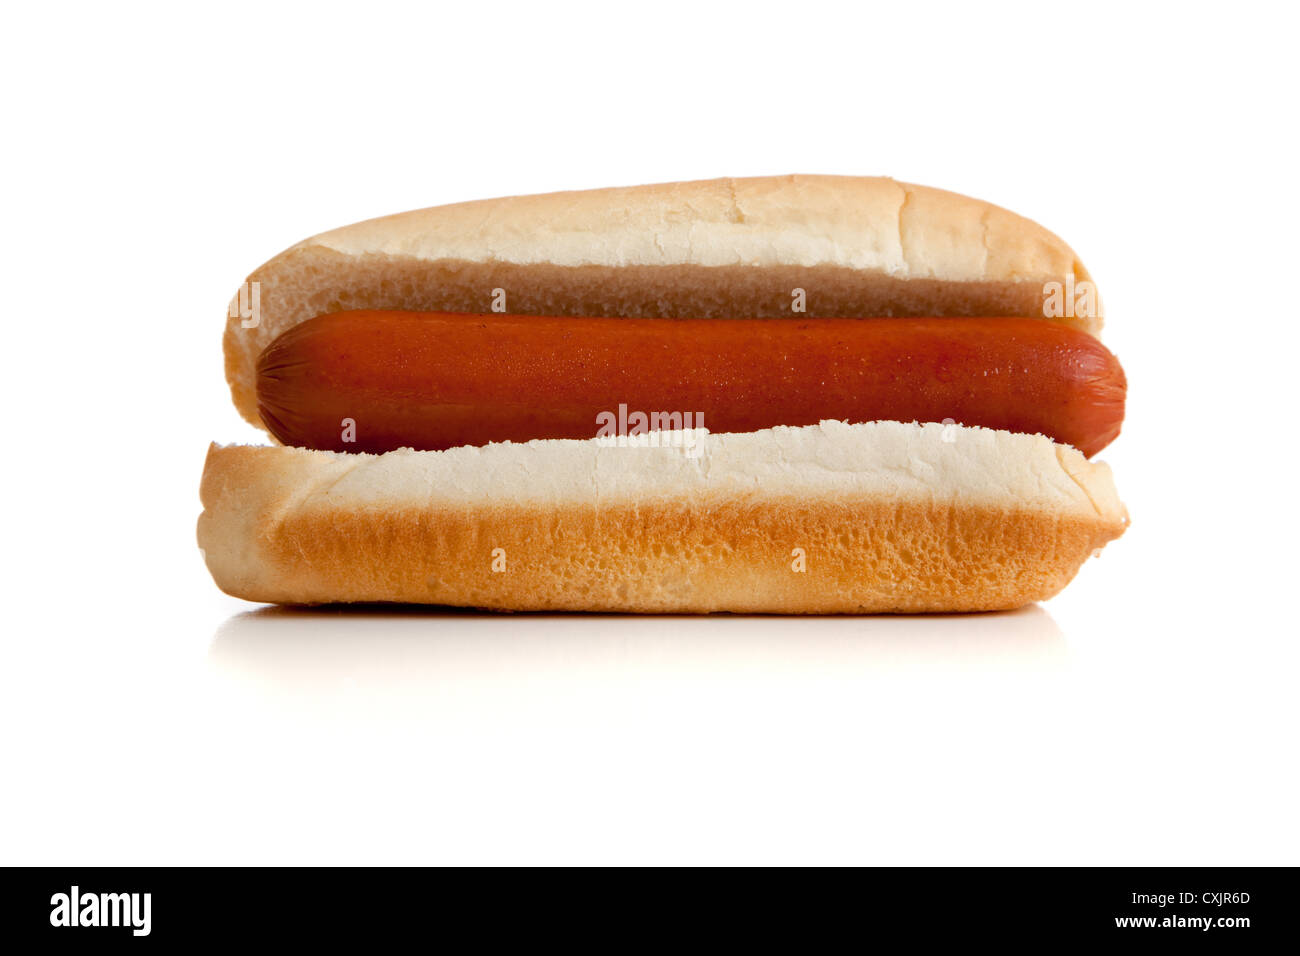 A single hot dog in a bun on a whitek background Stock Photo